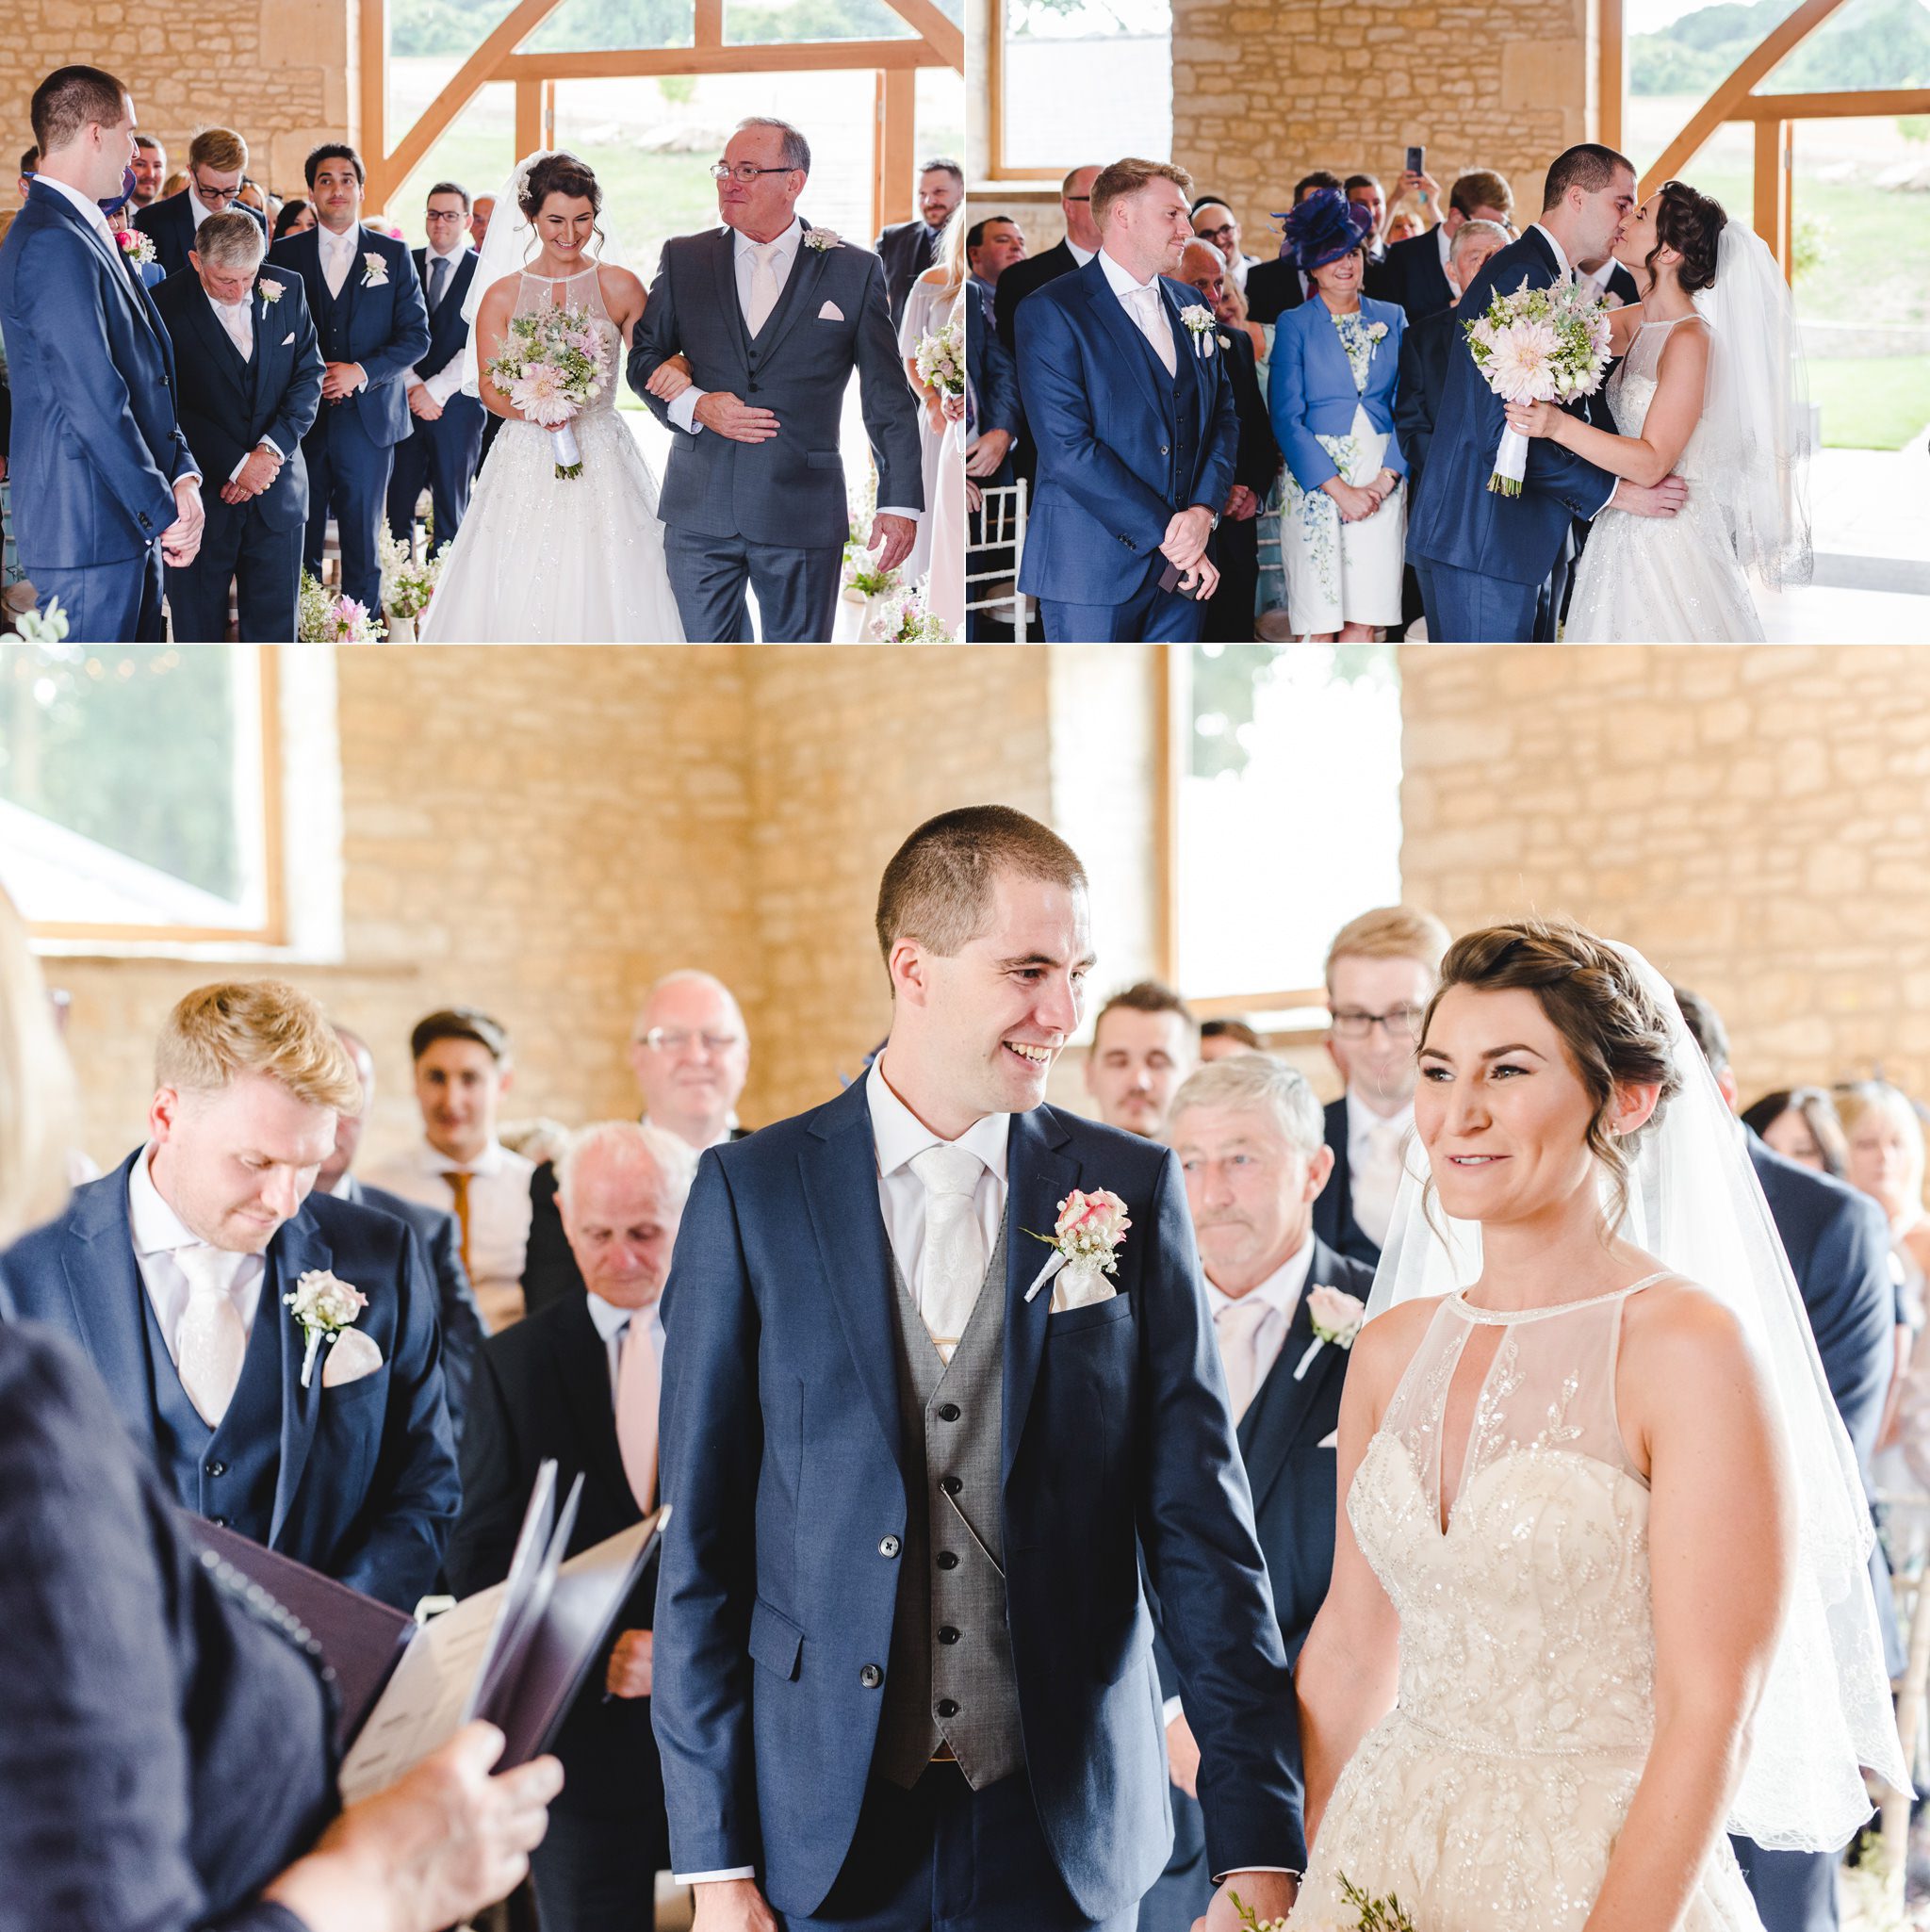 Upcote Barn wedding ceremony